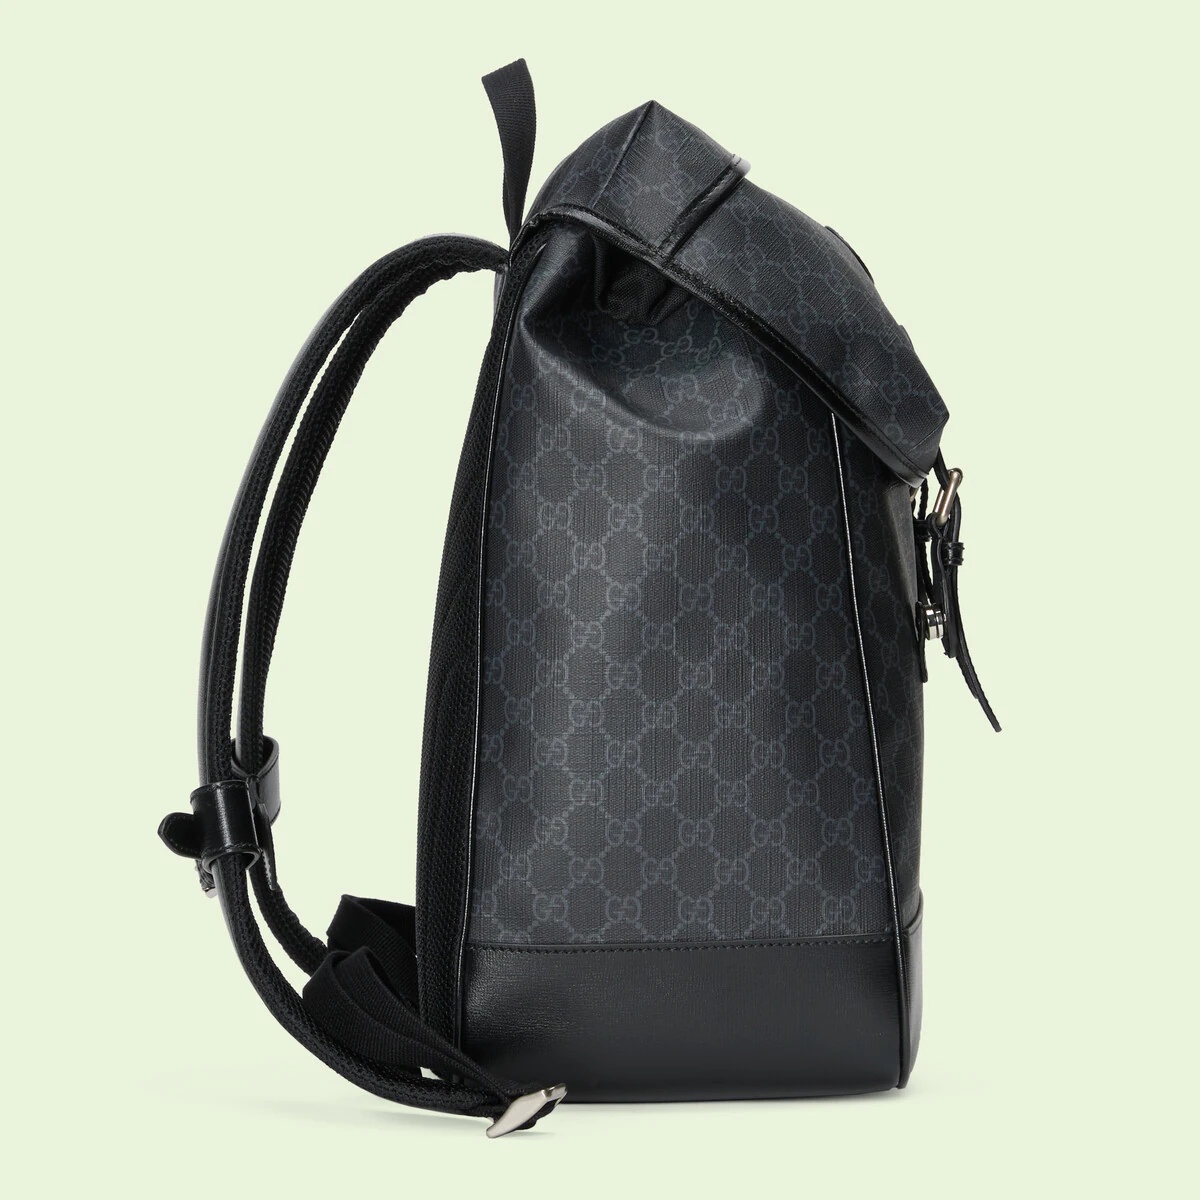 Medium backpack with Interlocking G - 5